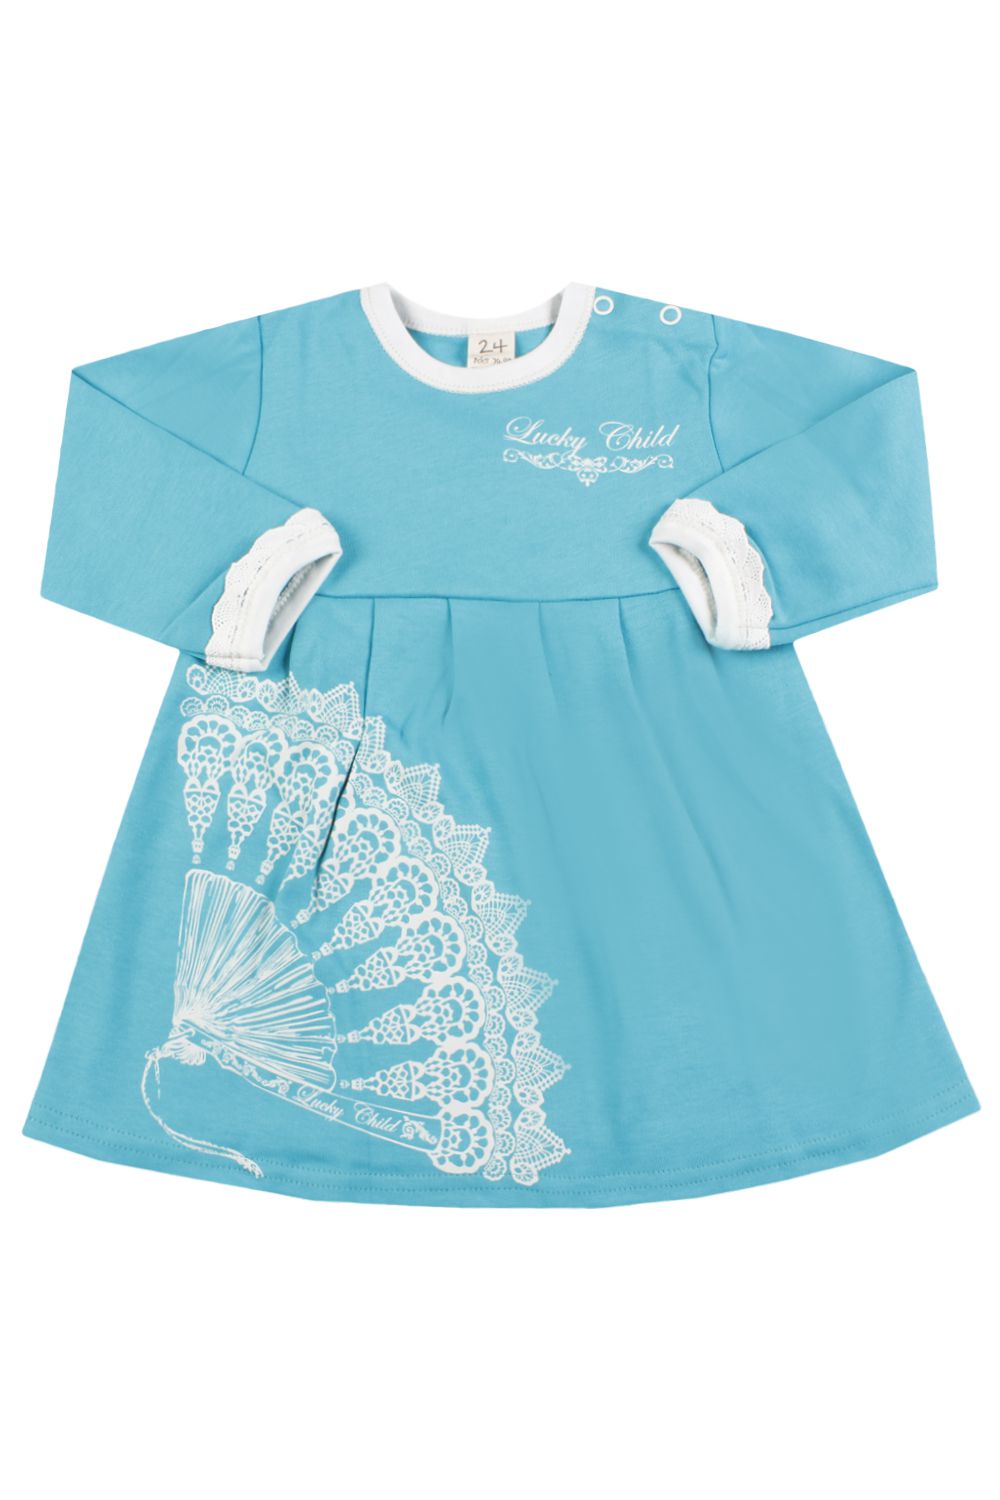 Платье Lucky Child, размер 74-80, цвет голубой 14-6 - фото 1